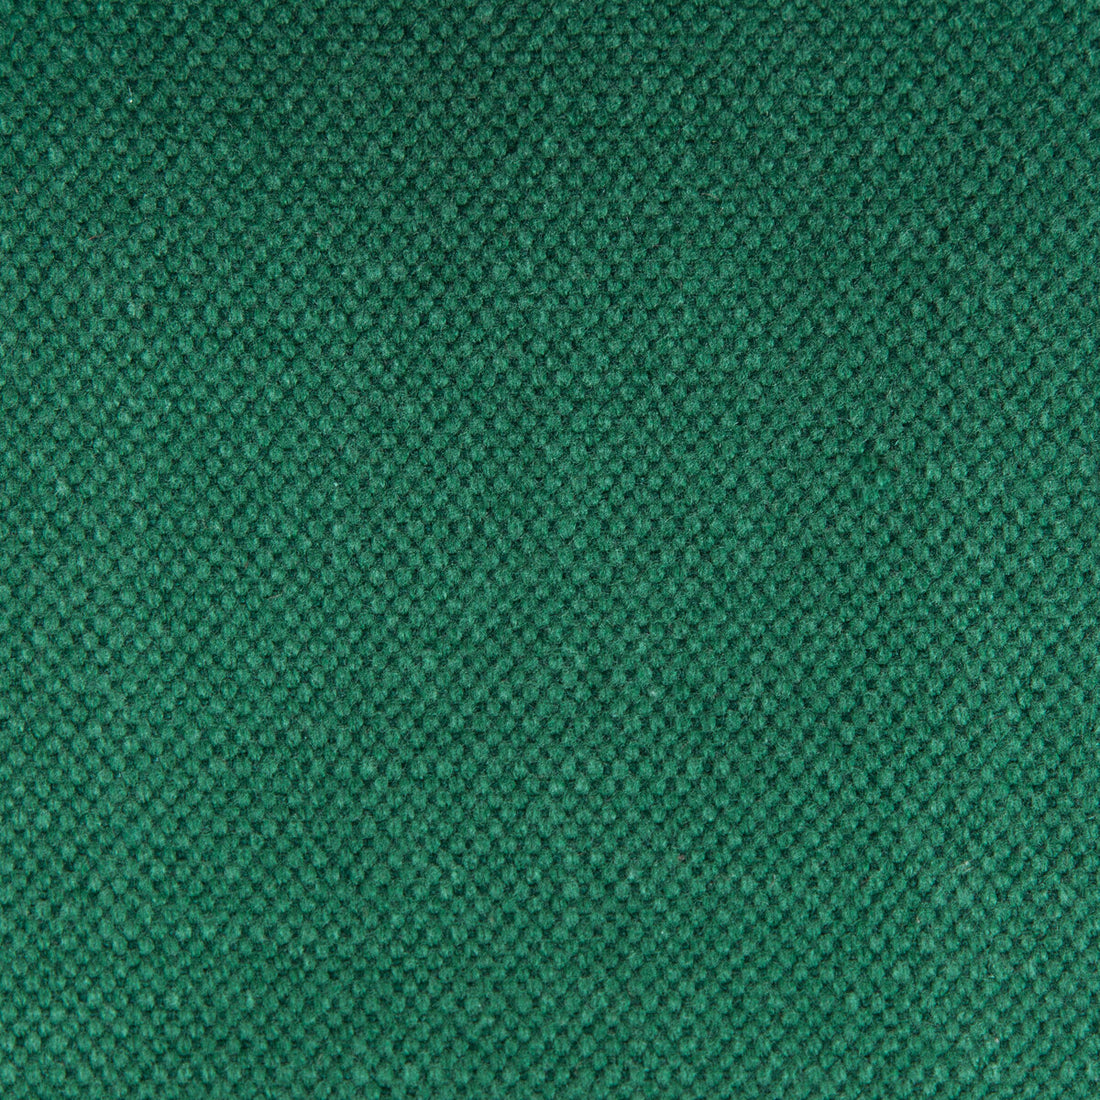 Lima fabric in emerald color - pattern GDT5616.027.0 - by Gaston y Daniela in the Gaston Nuevo Mundo collection